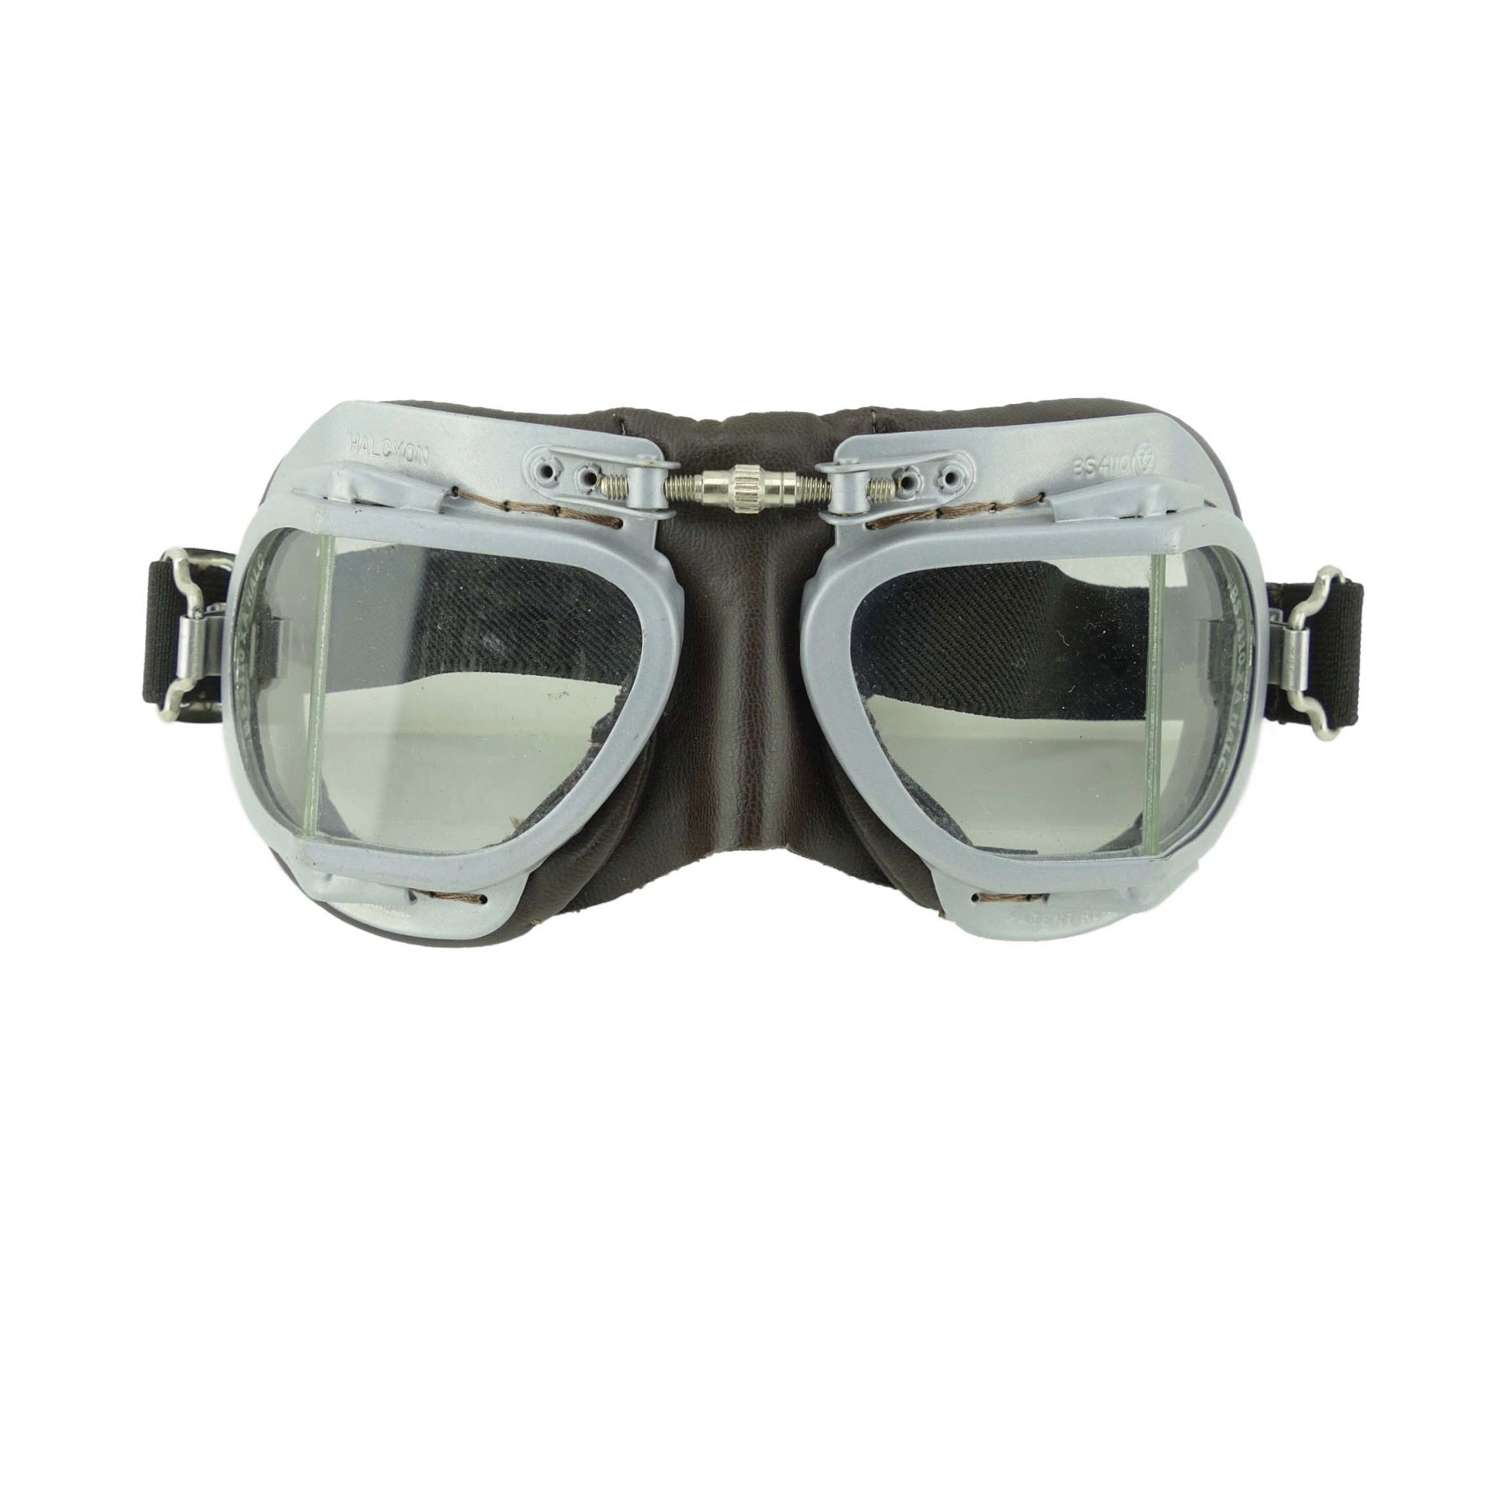 Halcyon 'Mk.VIII' goggles